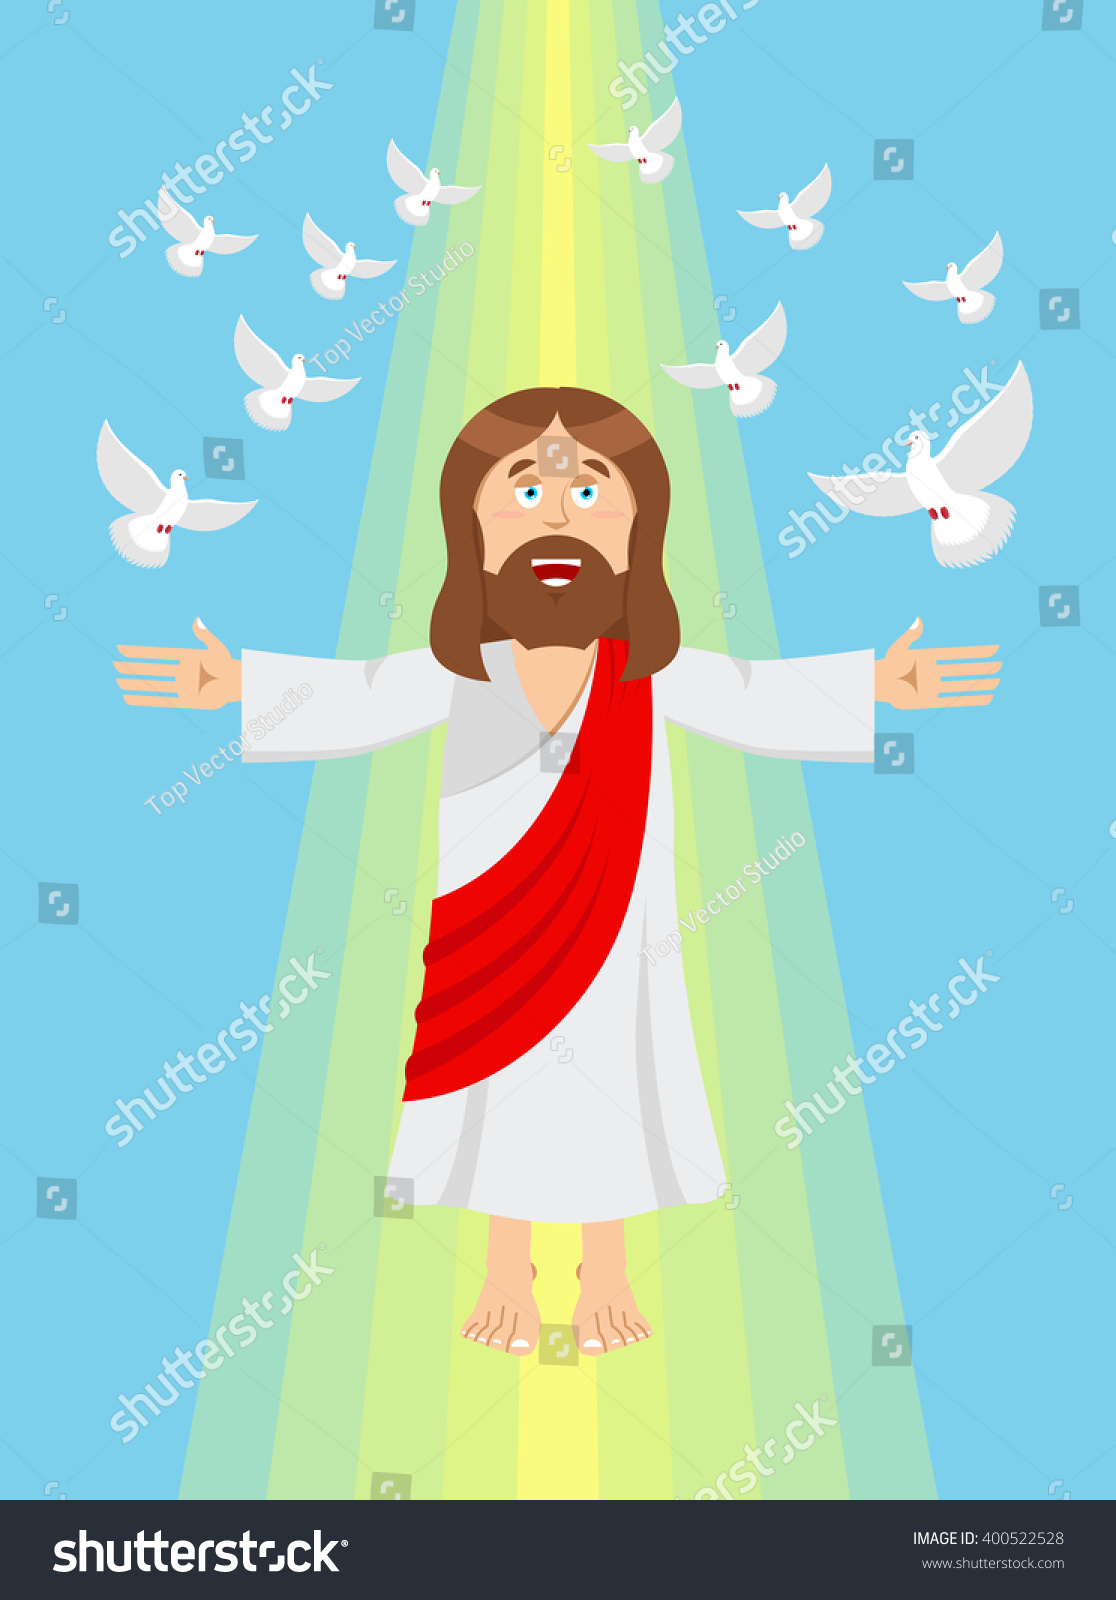 clipart jesus in heaven - photo #7